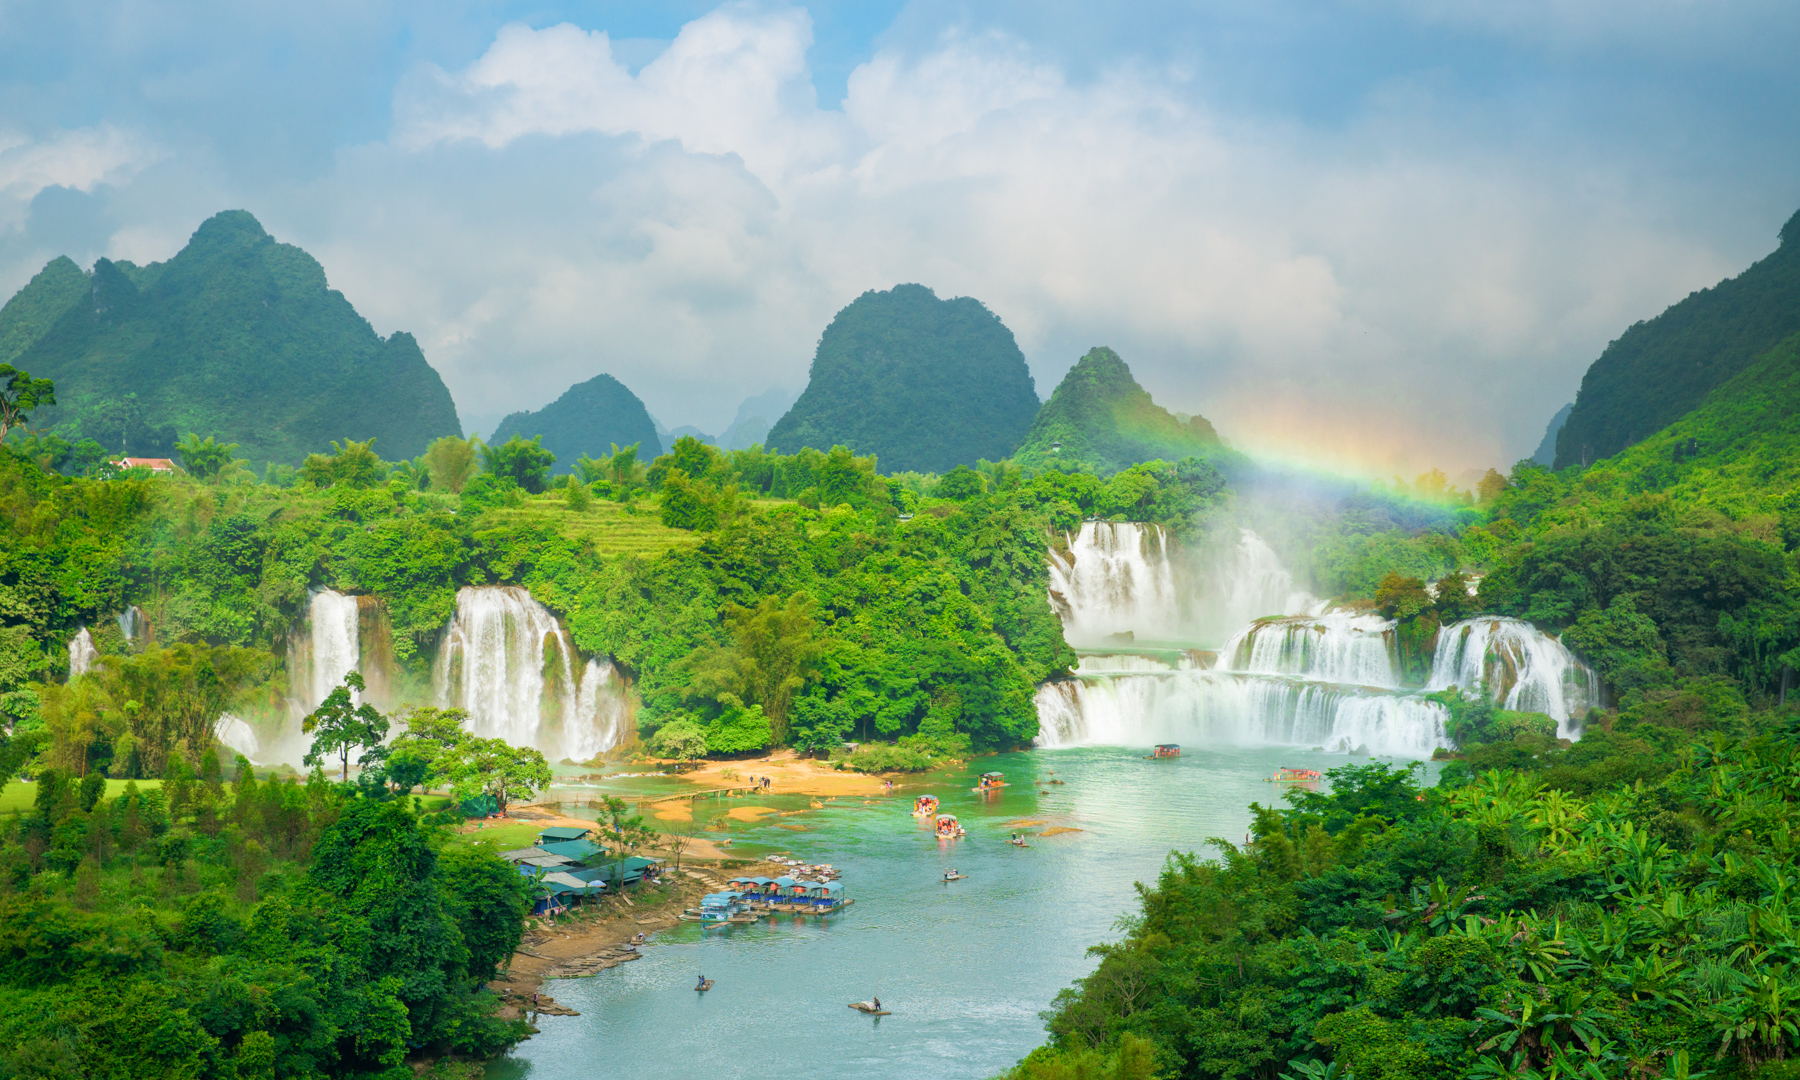 ban gioc waterfall vietnam tour